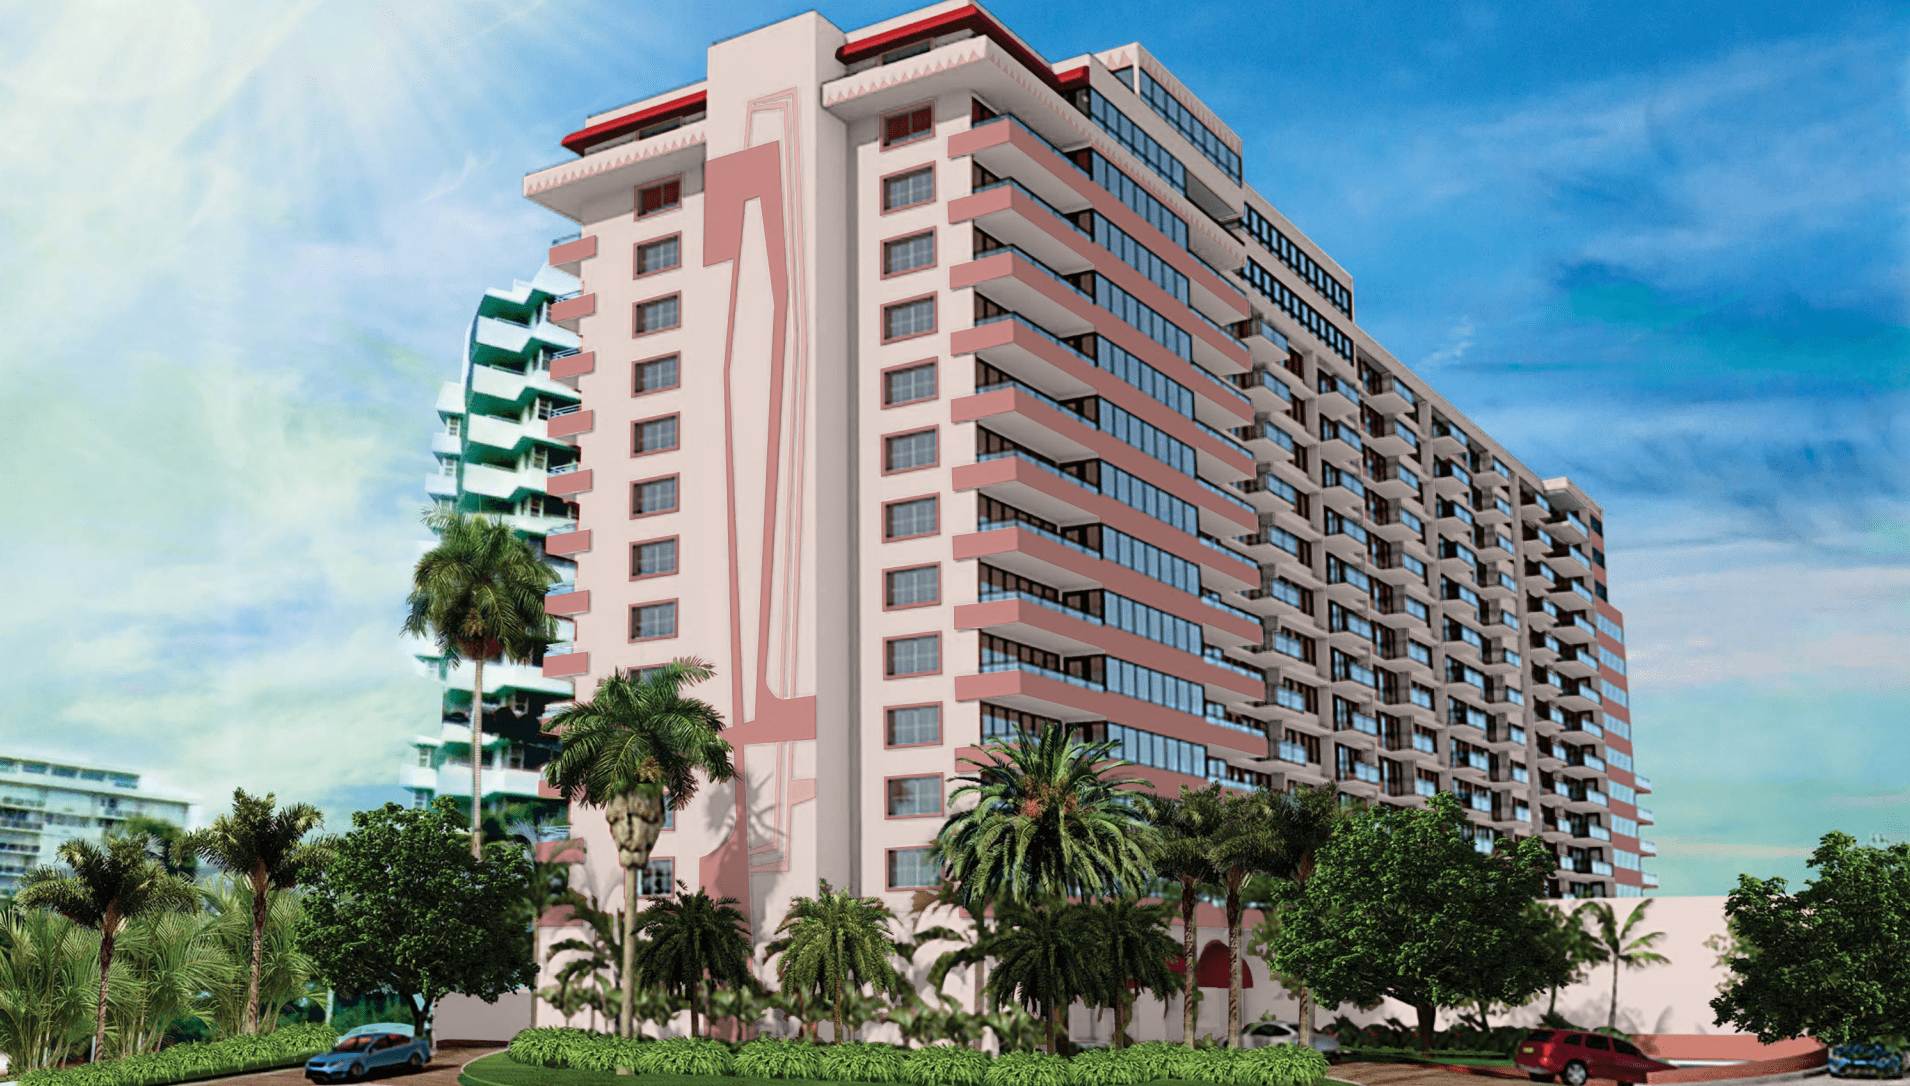 The Alexander Hotel Miami Beach Fl ti markdesigns